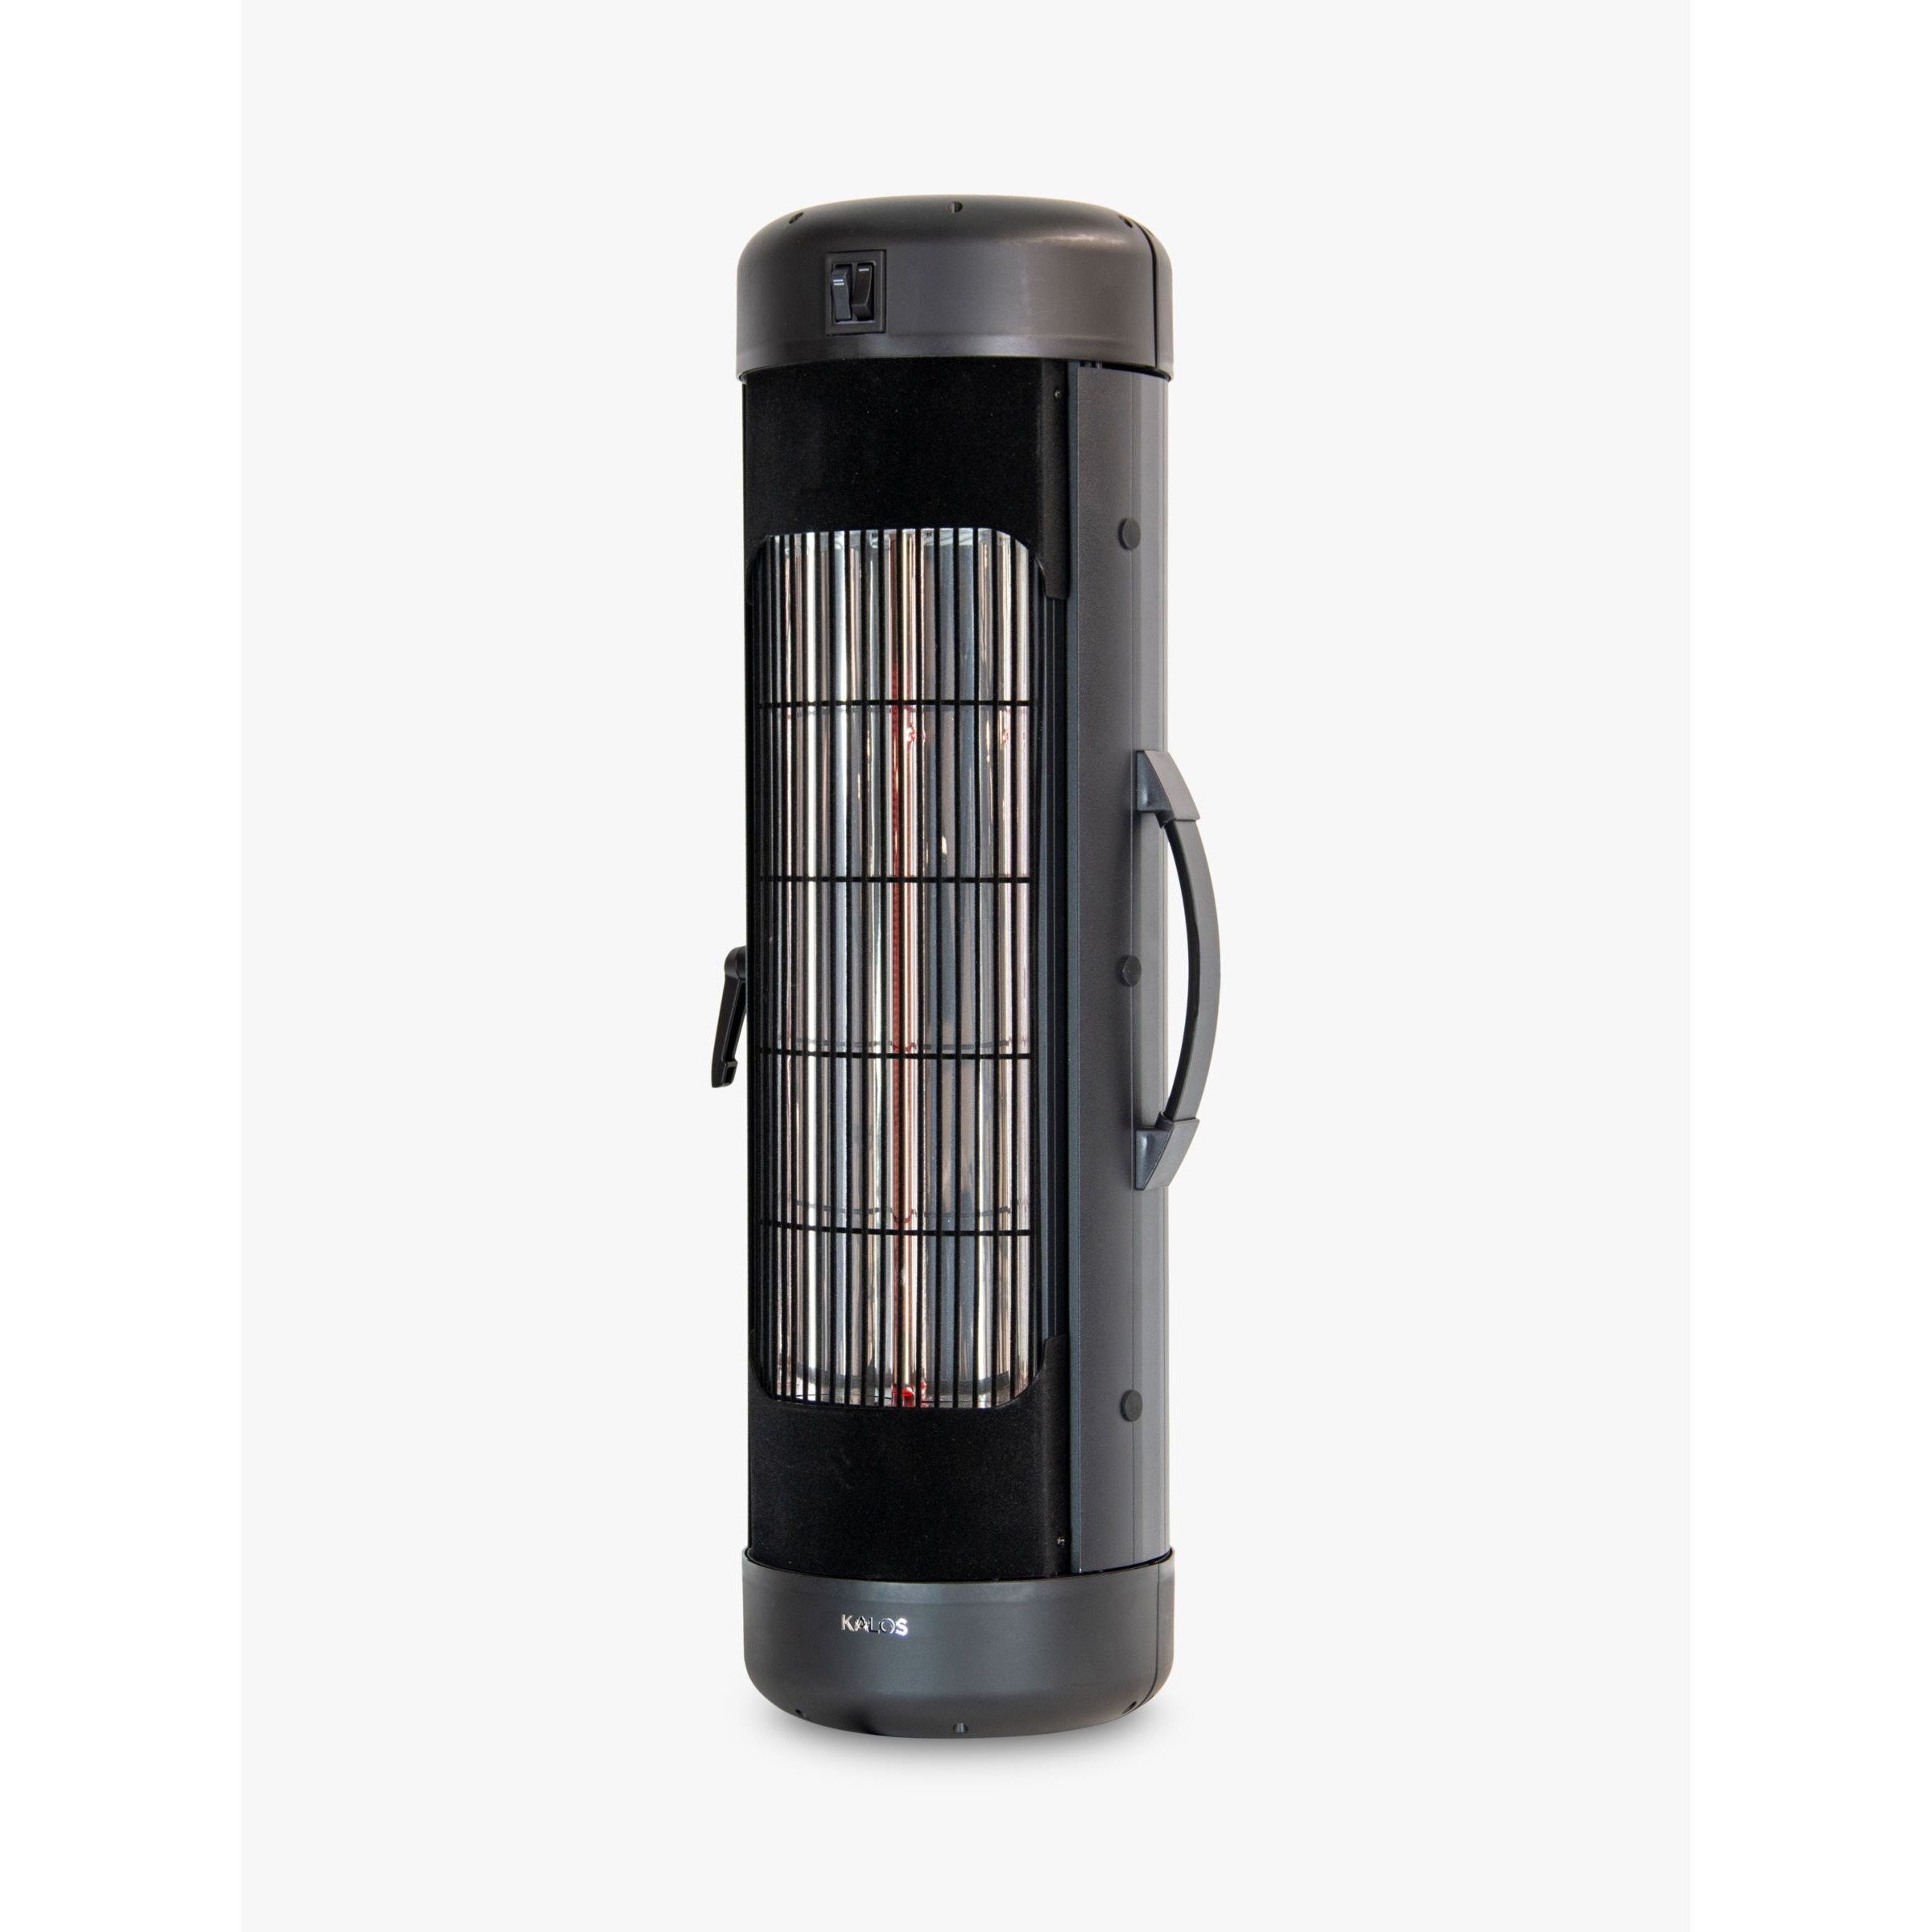 KETTLER Kalos Parasol Lantern Electric Patio Heater, Black - image 1